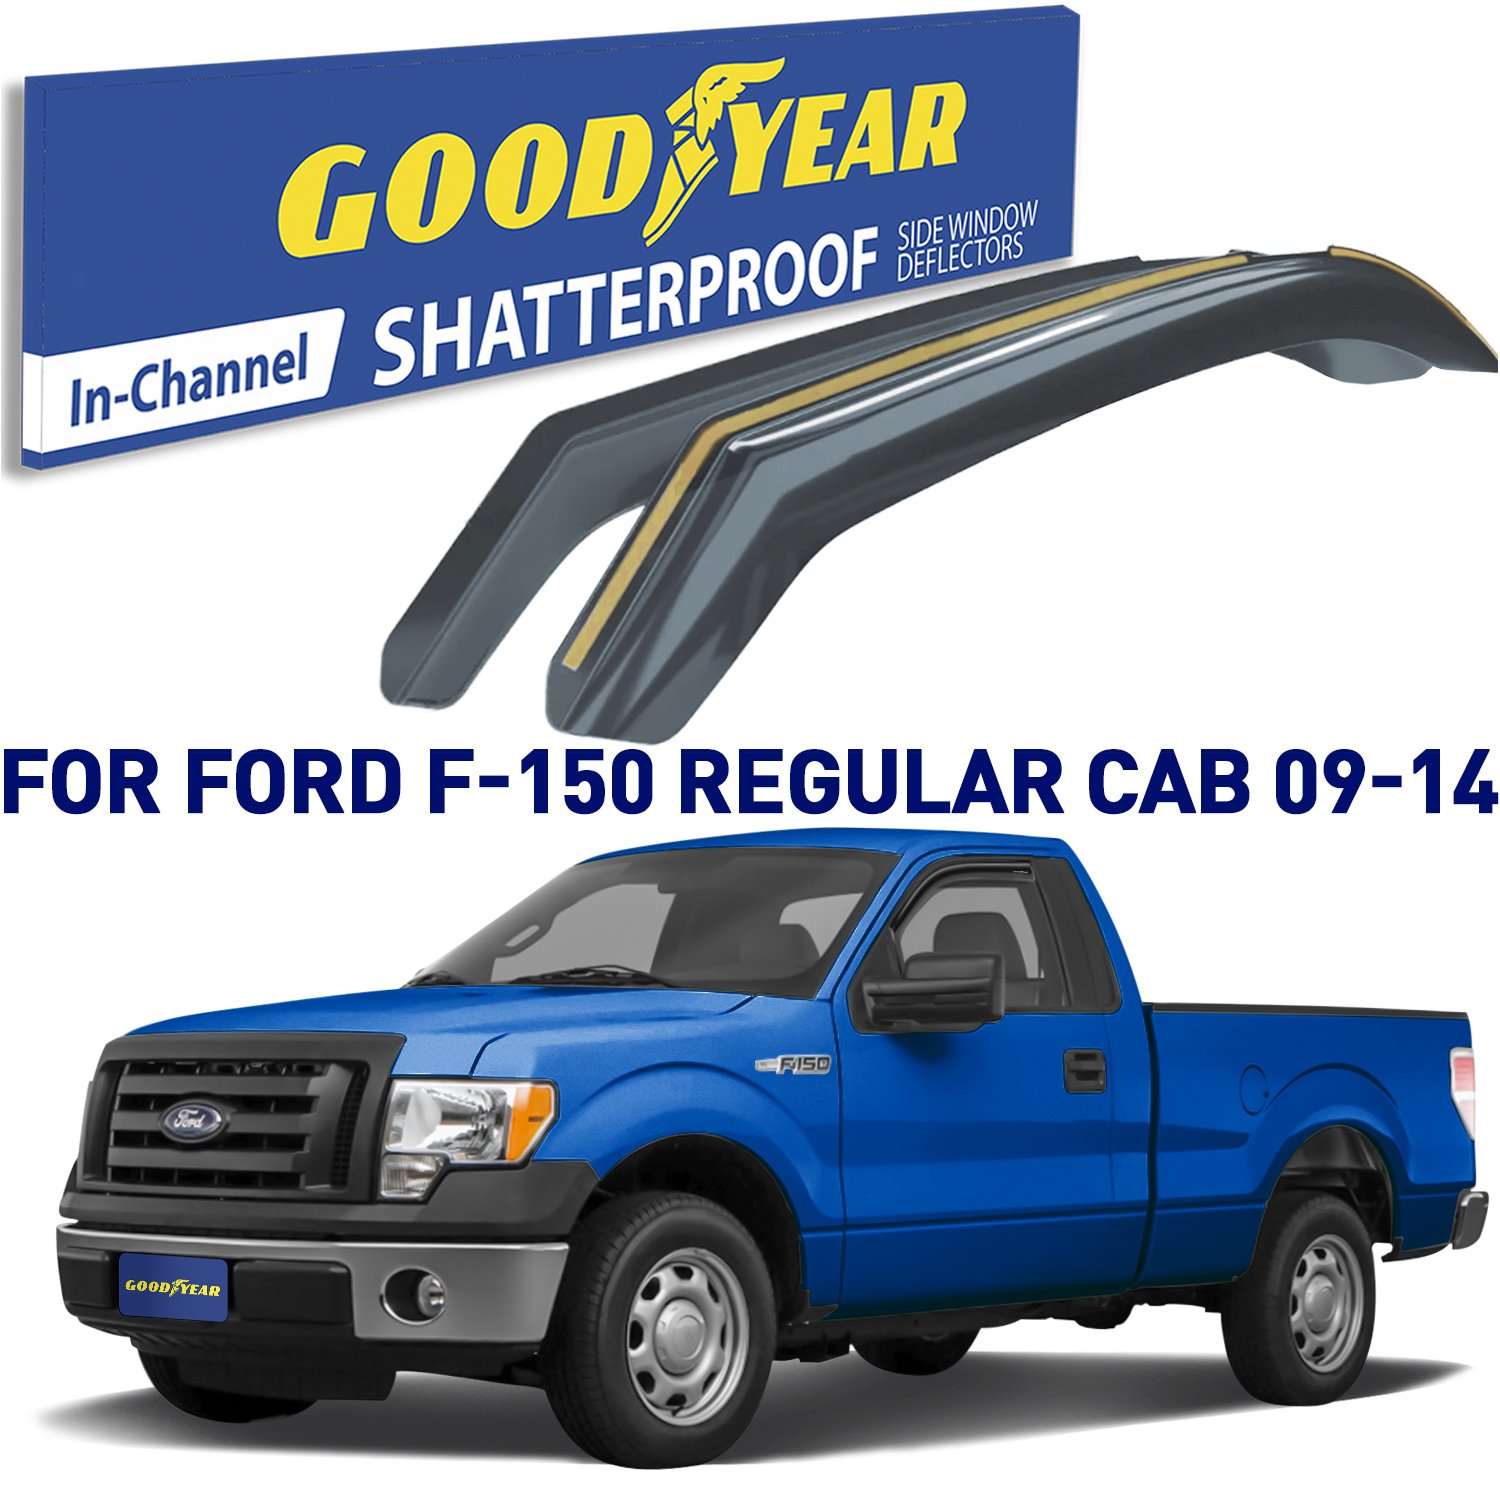 Goodyear Shatterproof Window Deflectors For 2009-2014 Ford F-150 Regular Cab